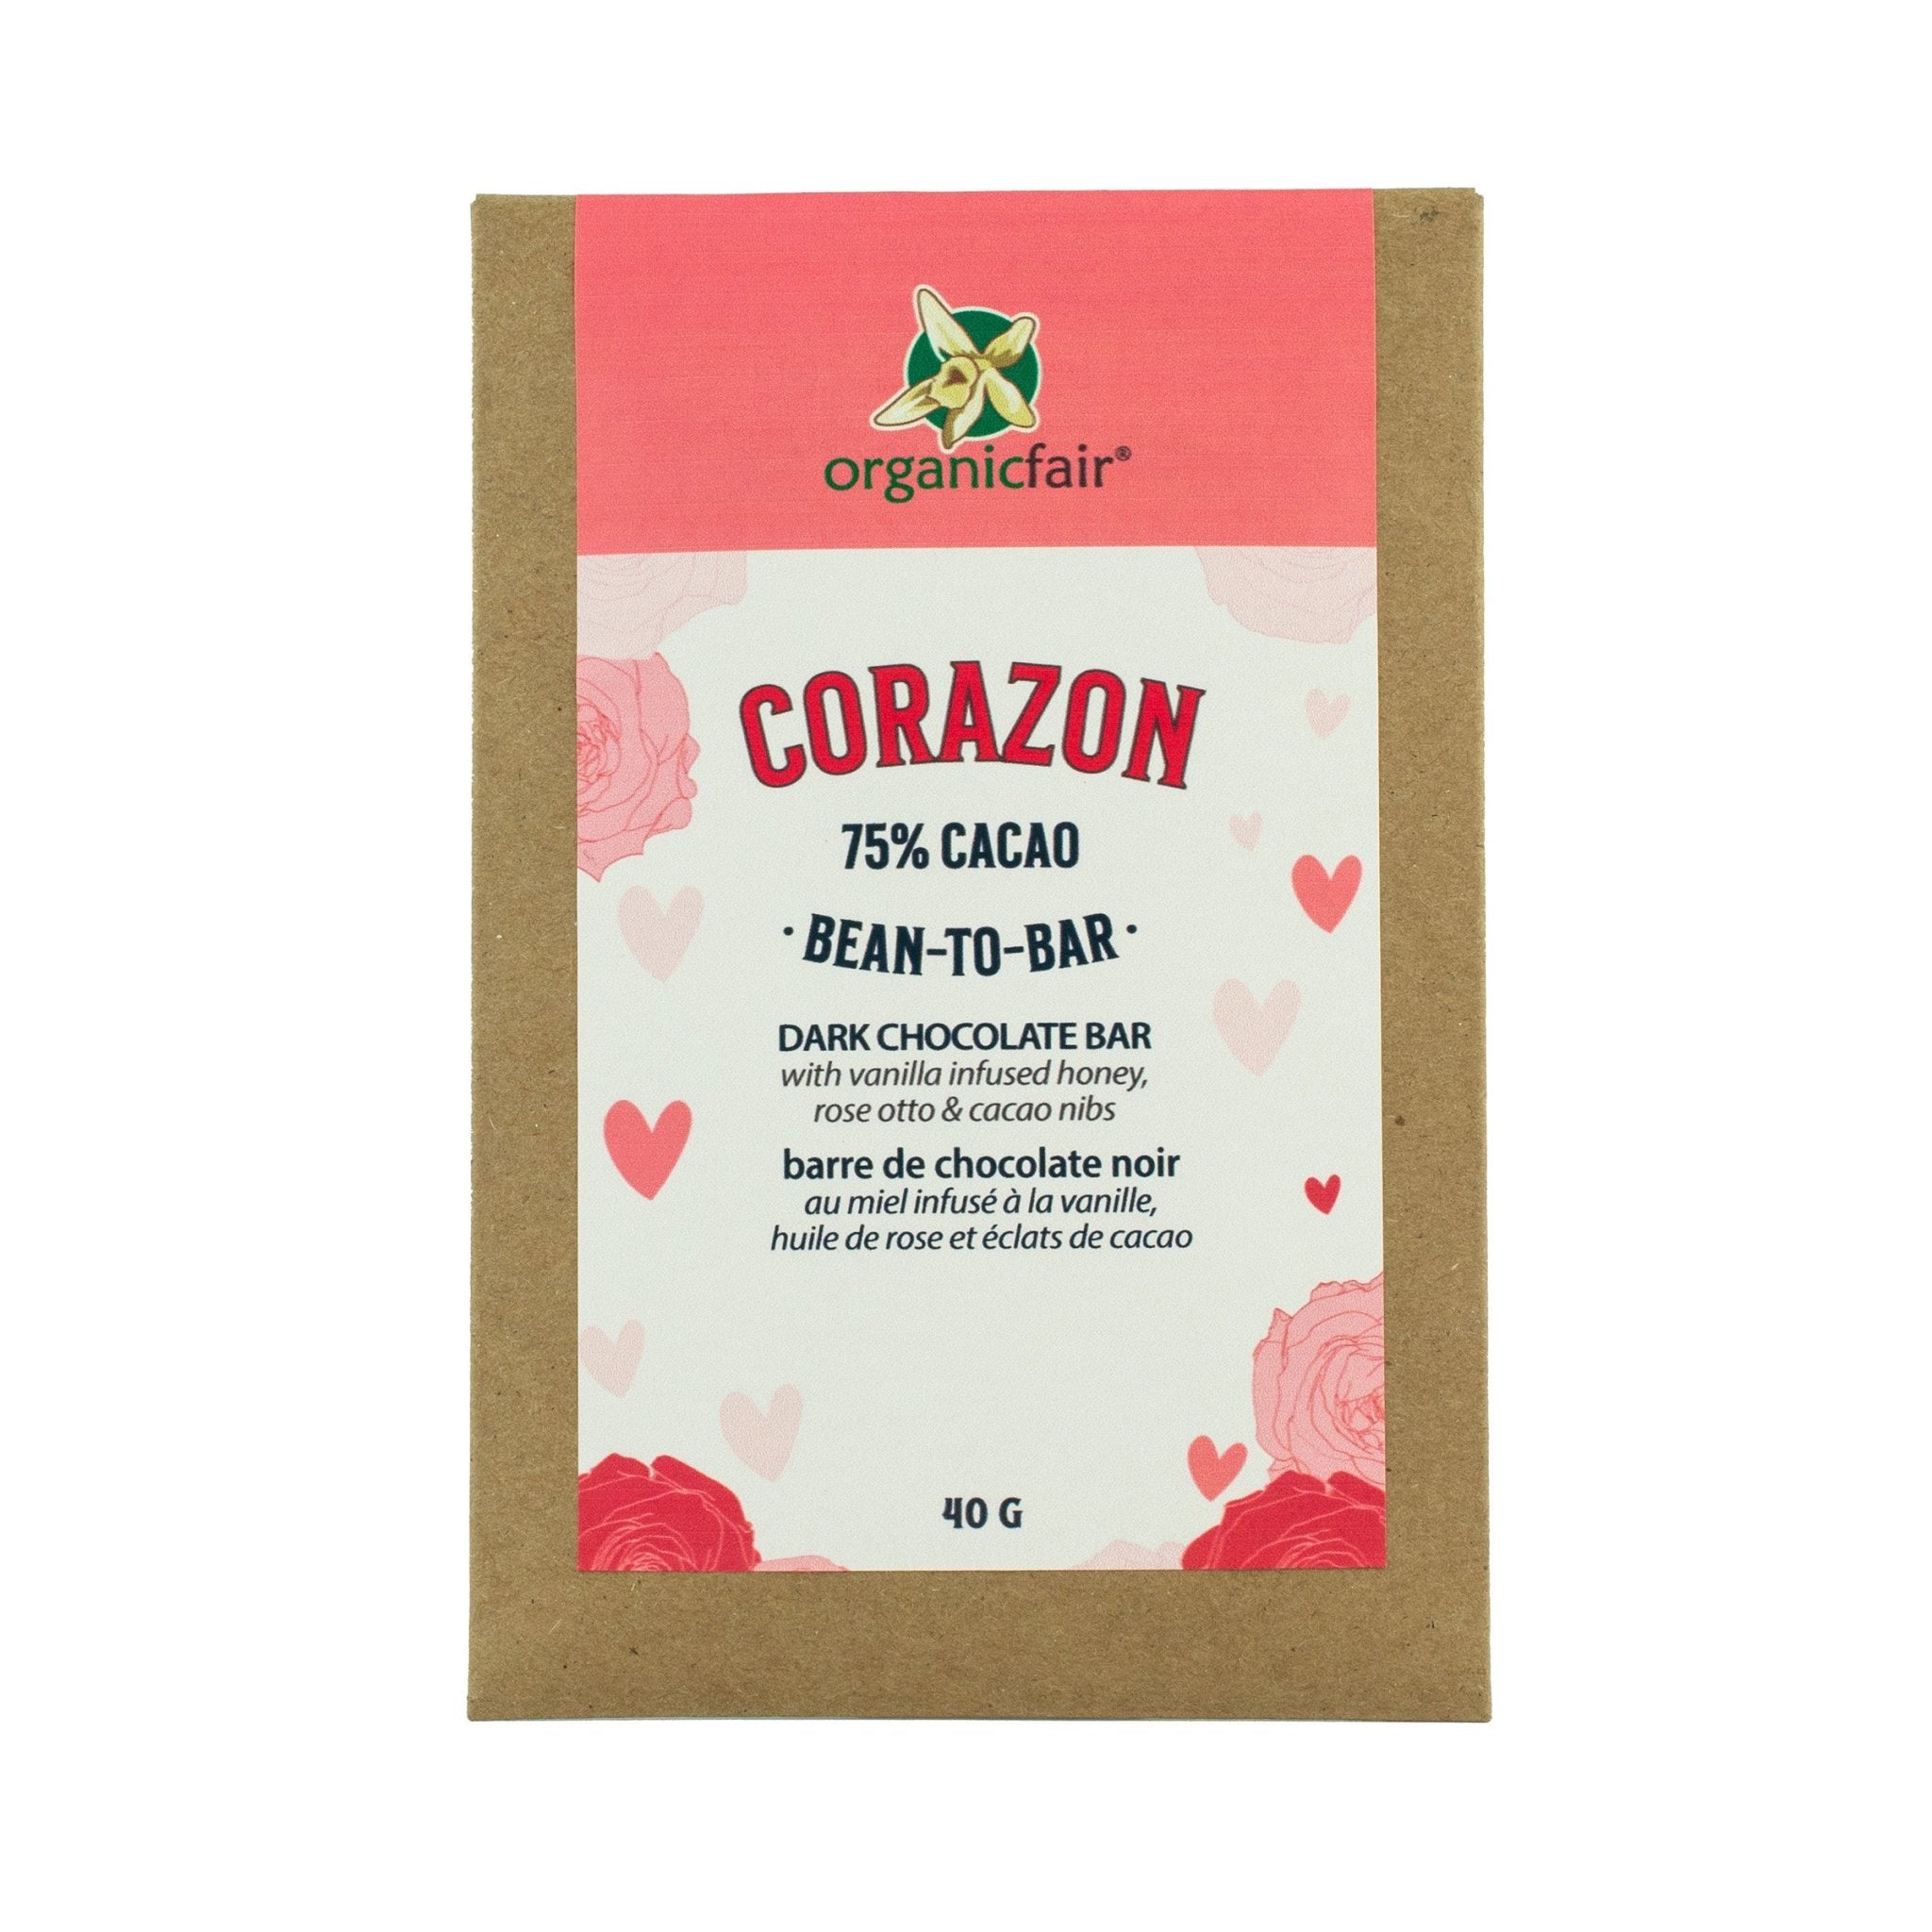 Corazon Dark Chocolate Bar - organicfair.com